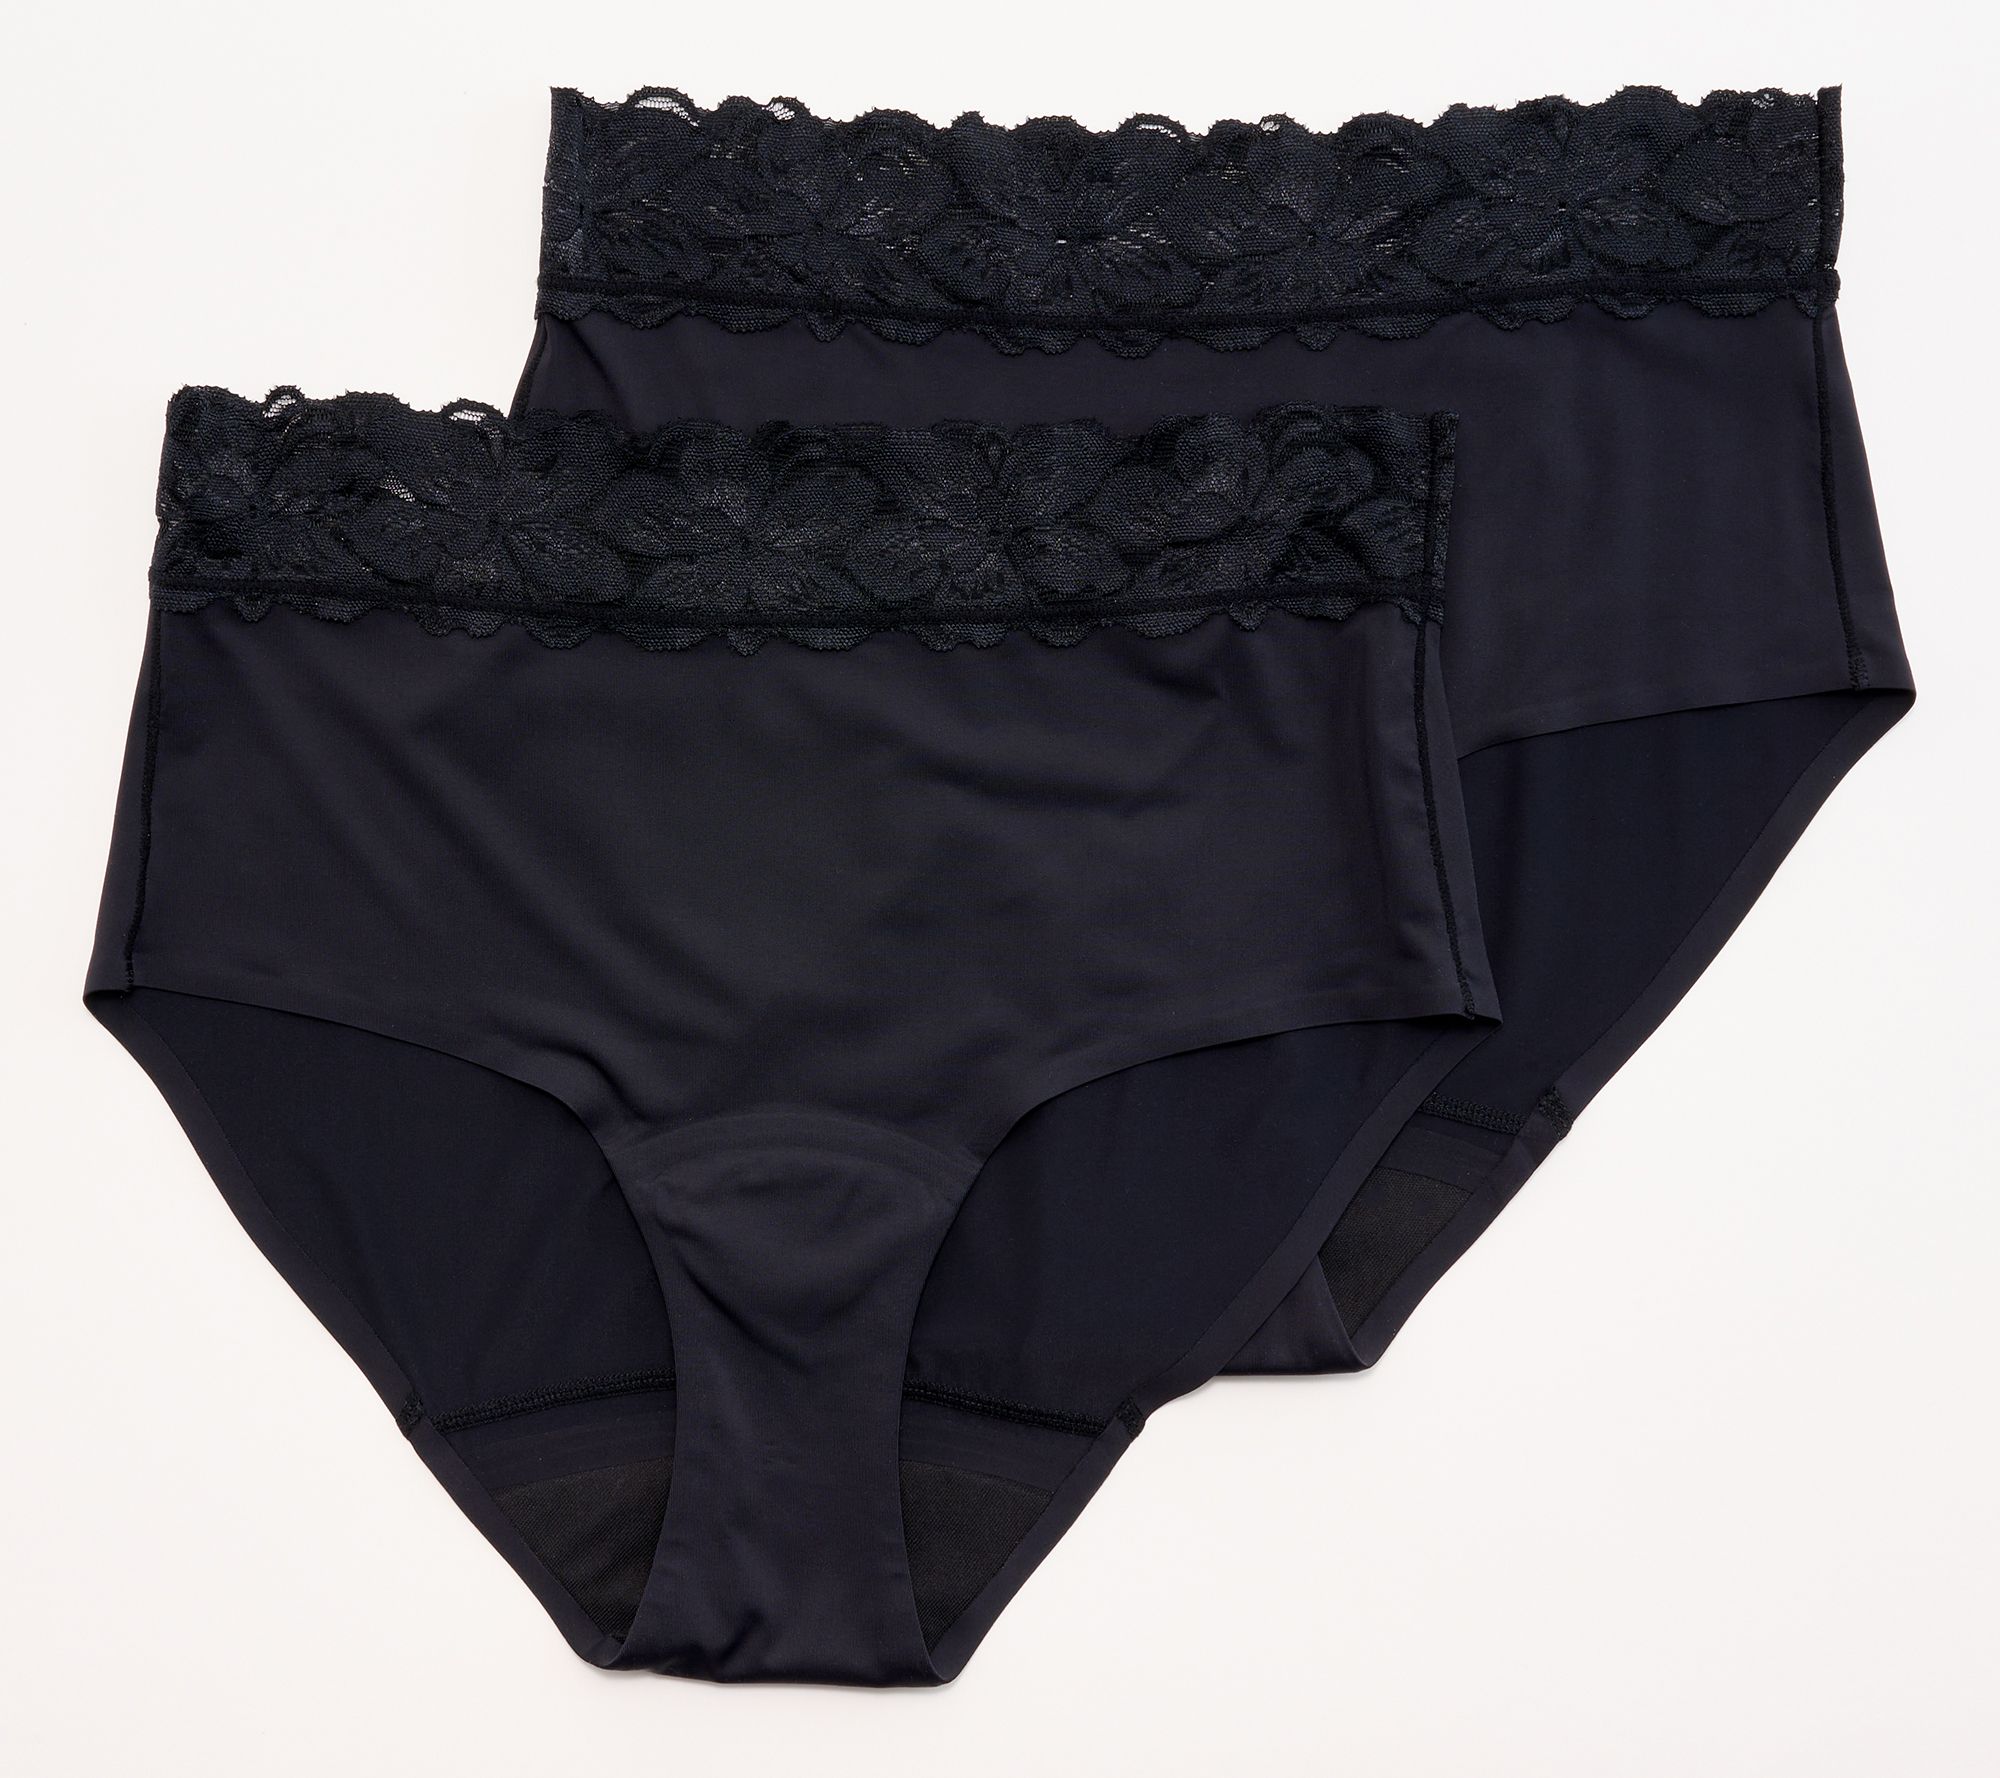 Underworks Women's Lace Trim Full Briefs 2 Pack - Nude & Black - Size 16